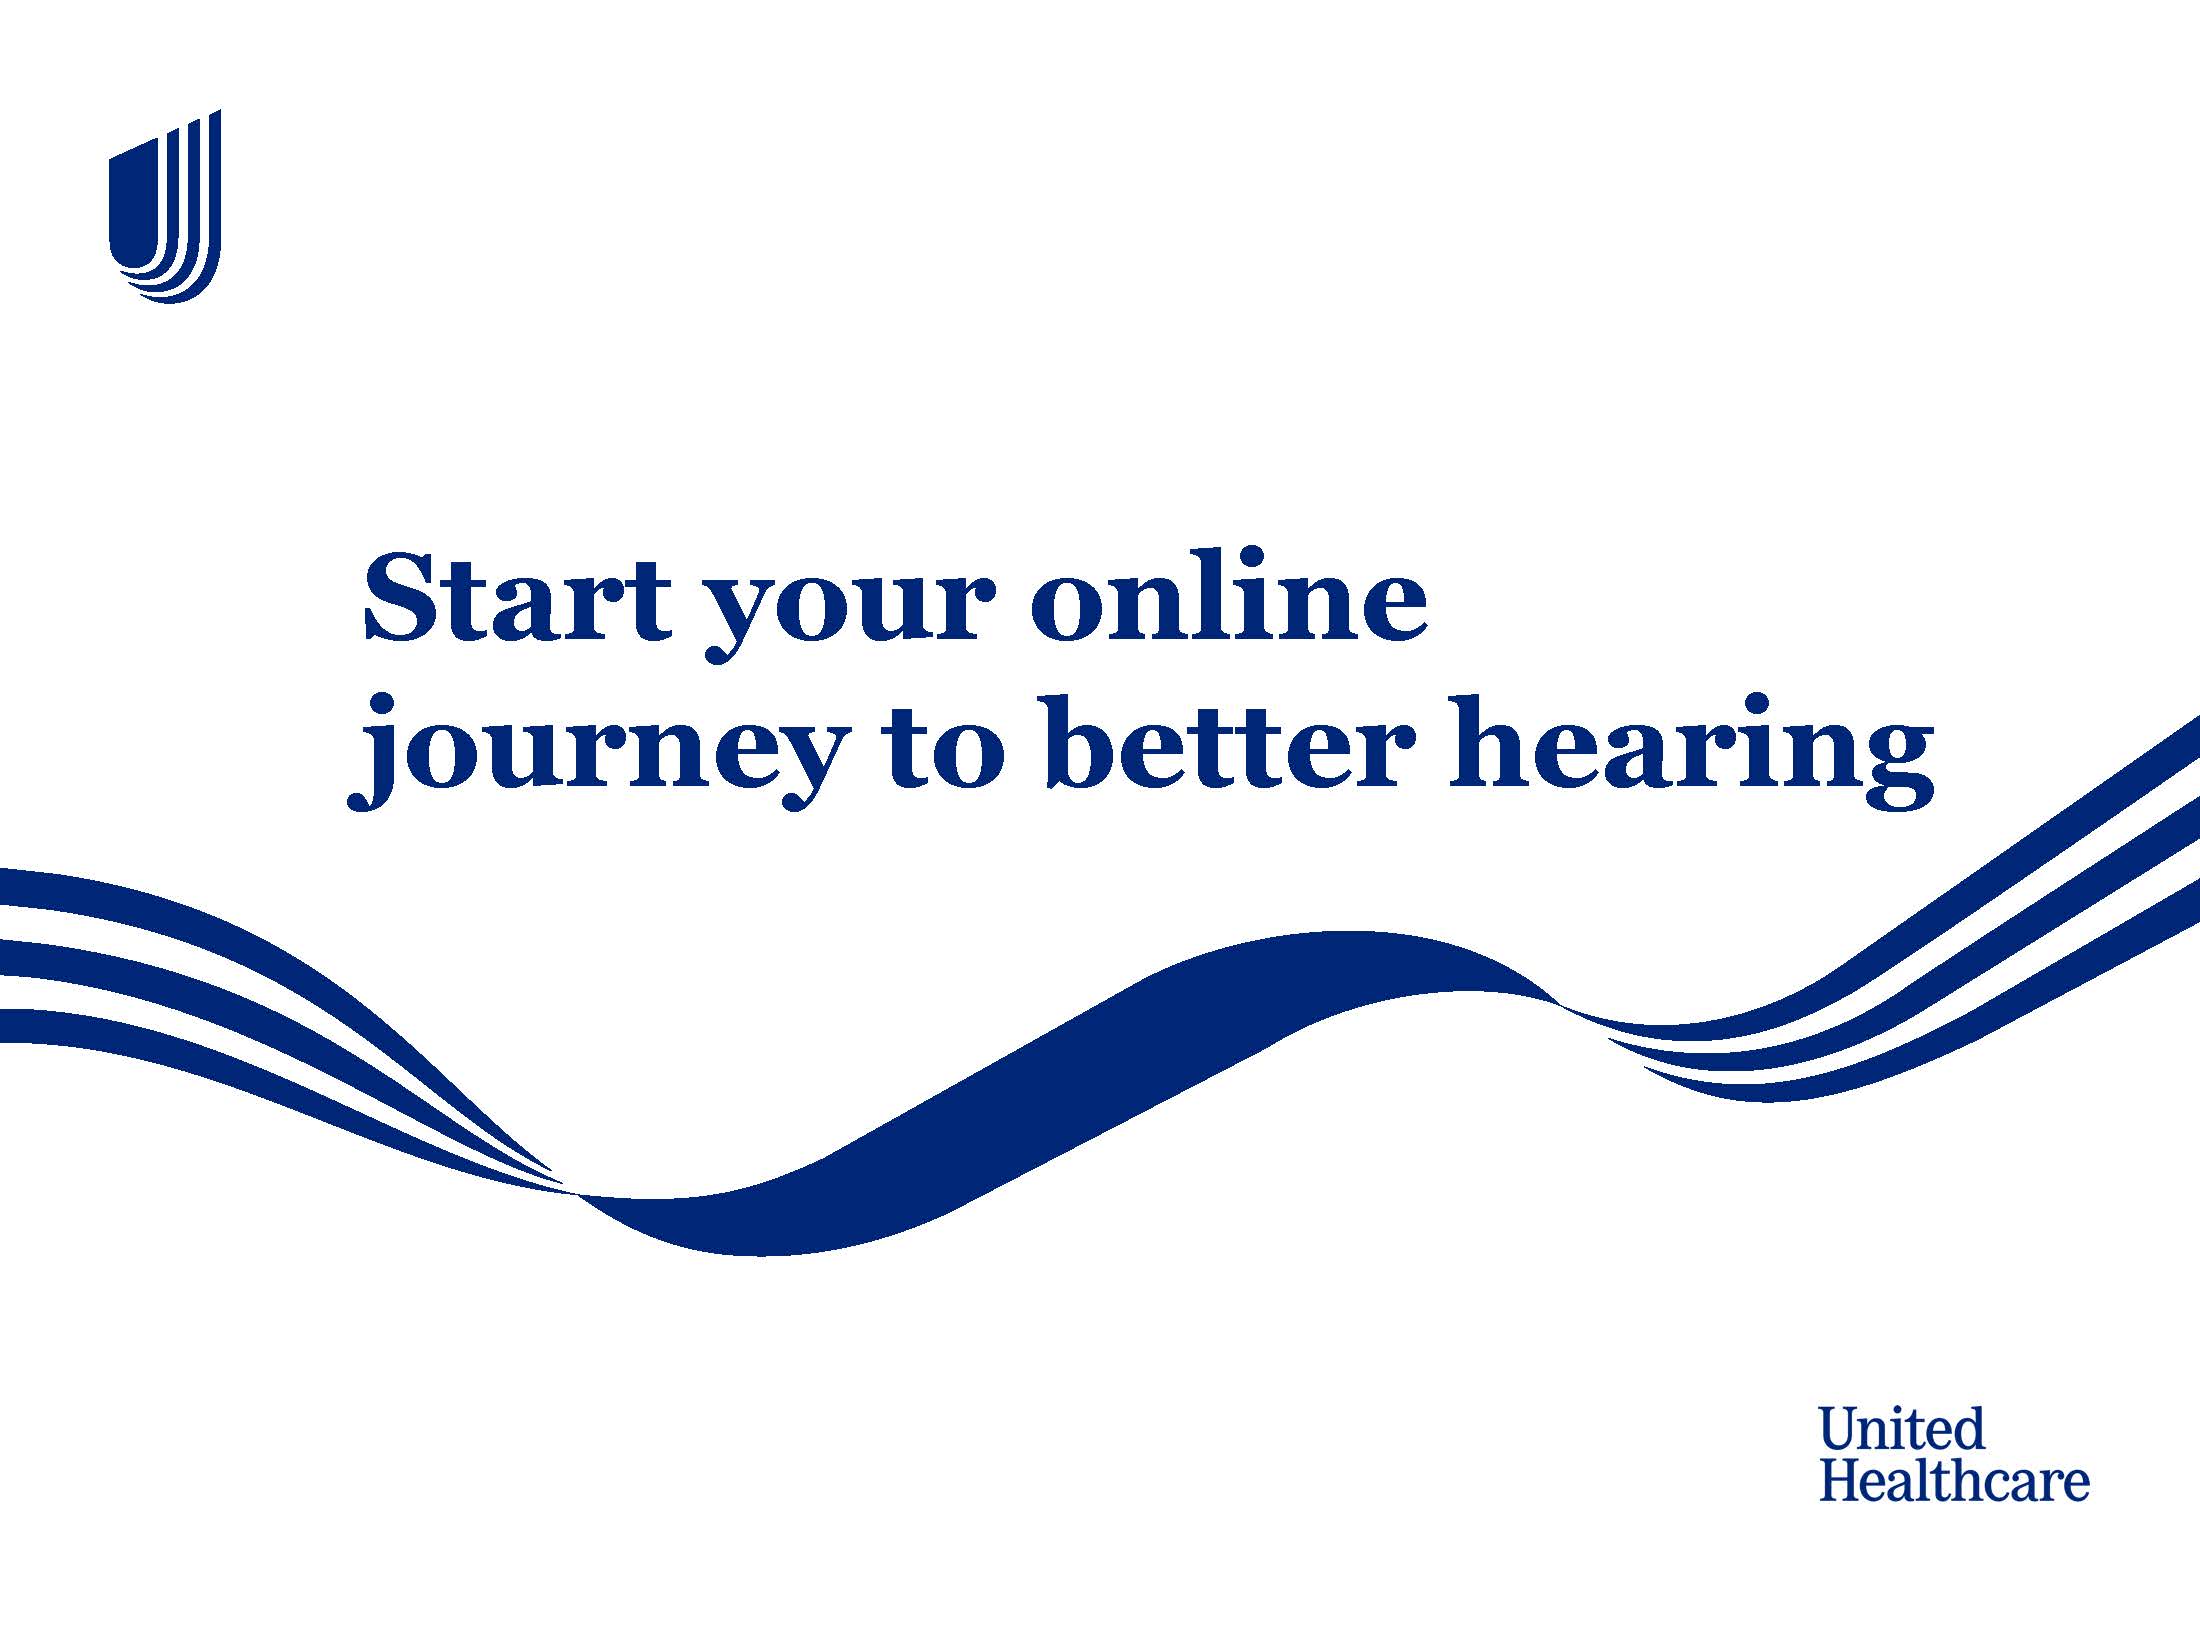 Start your online hearing journey